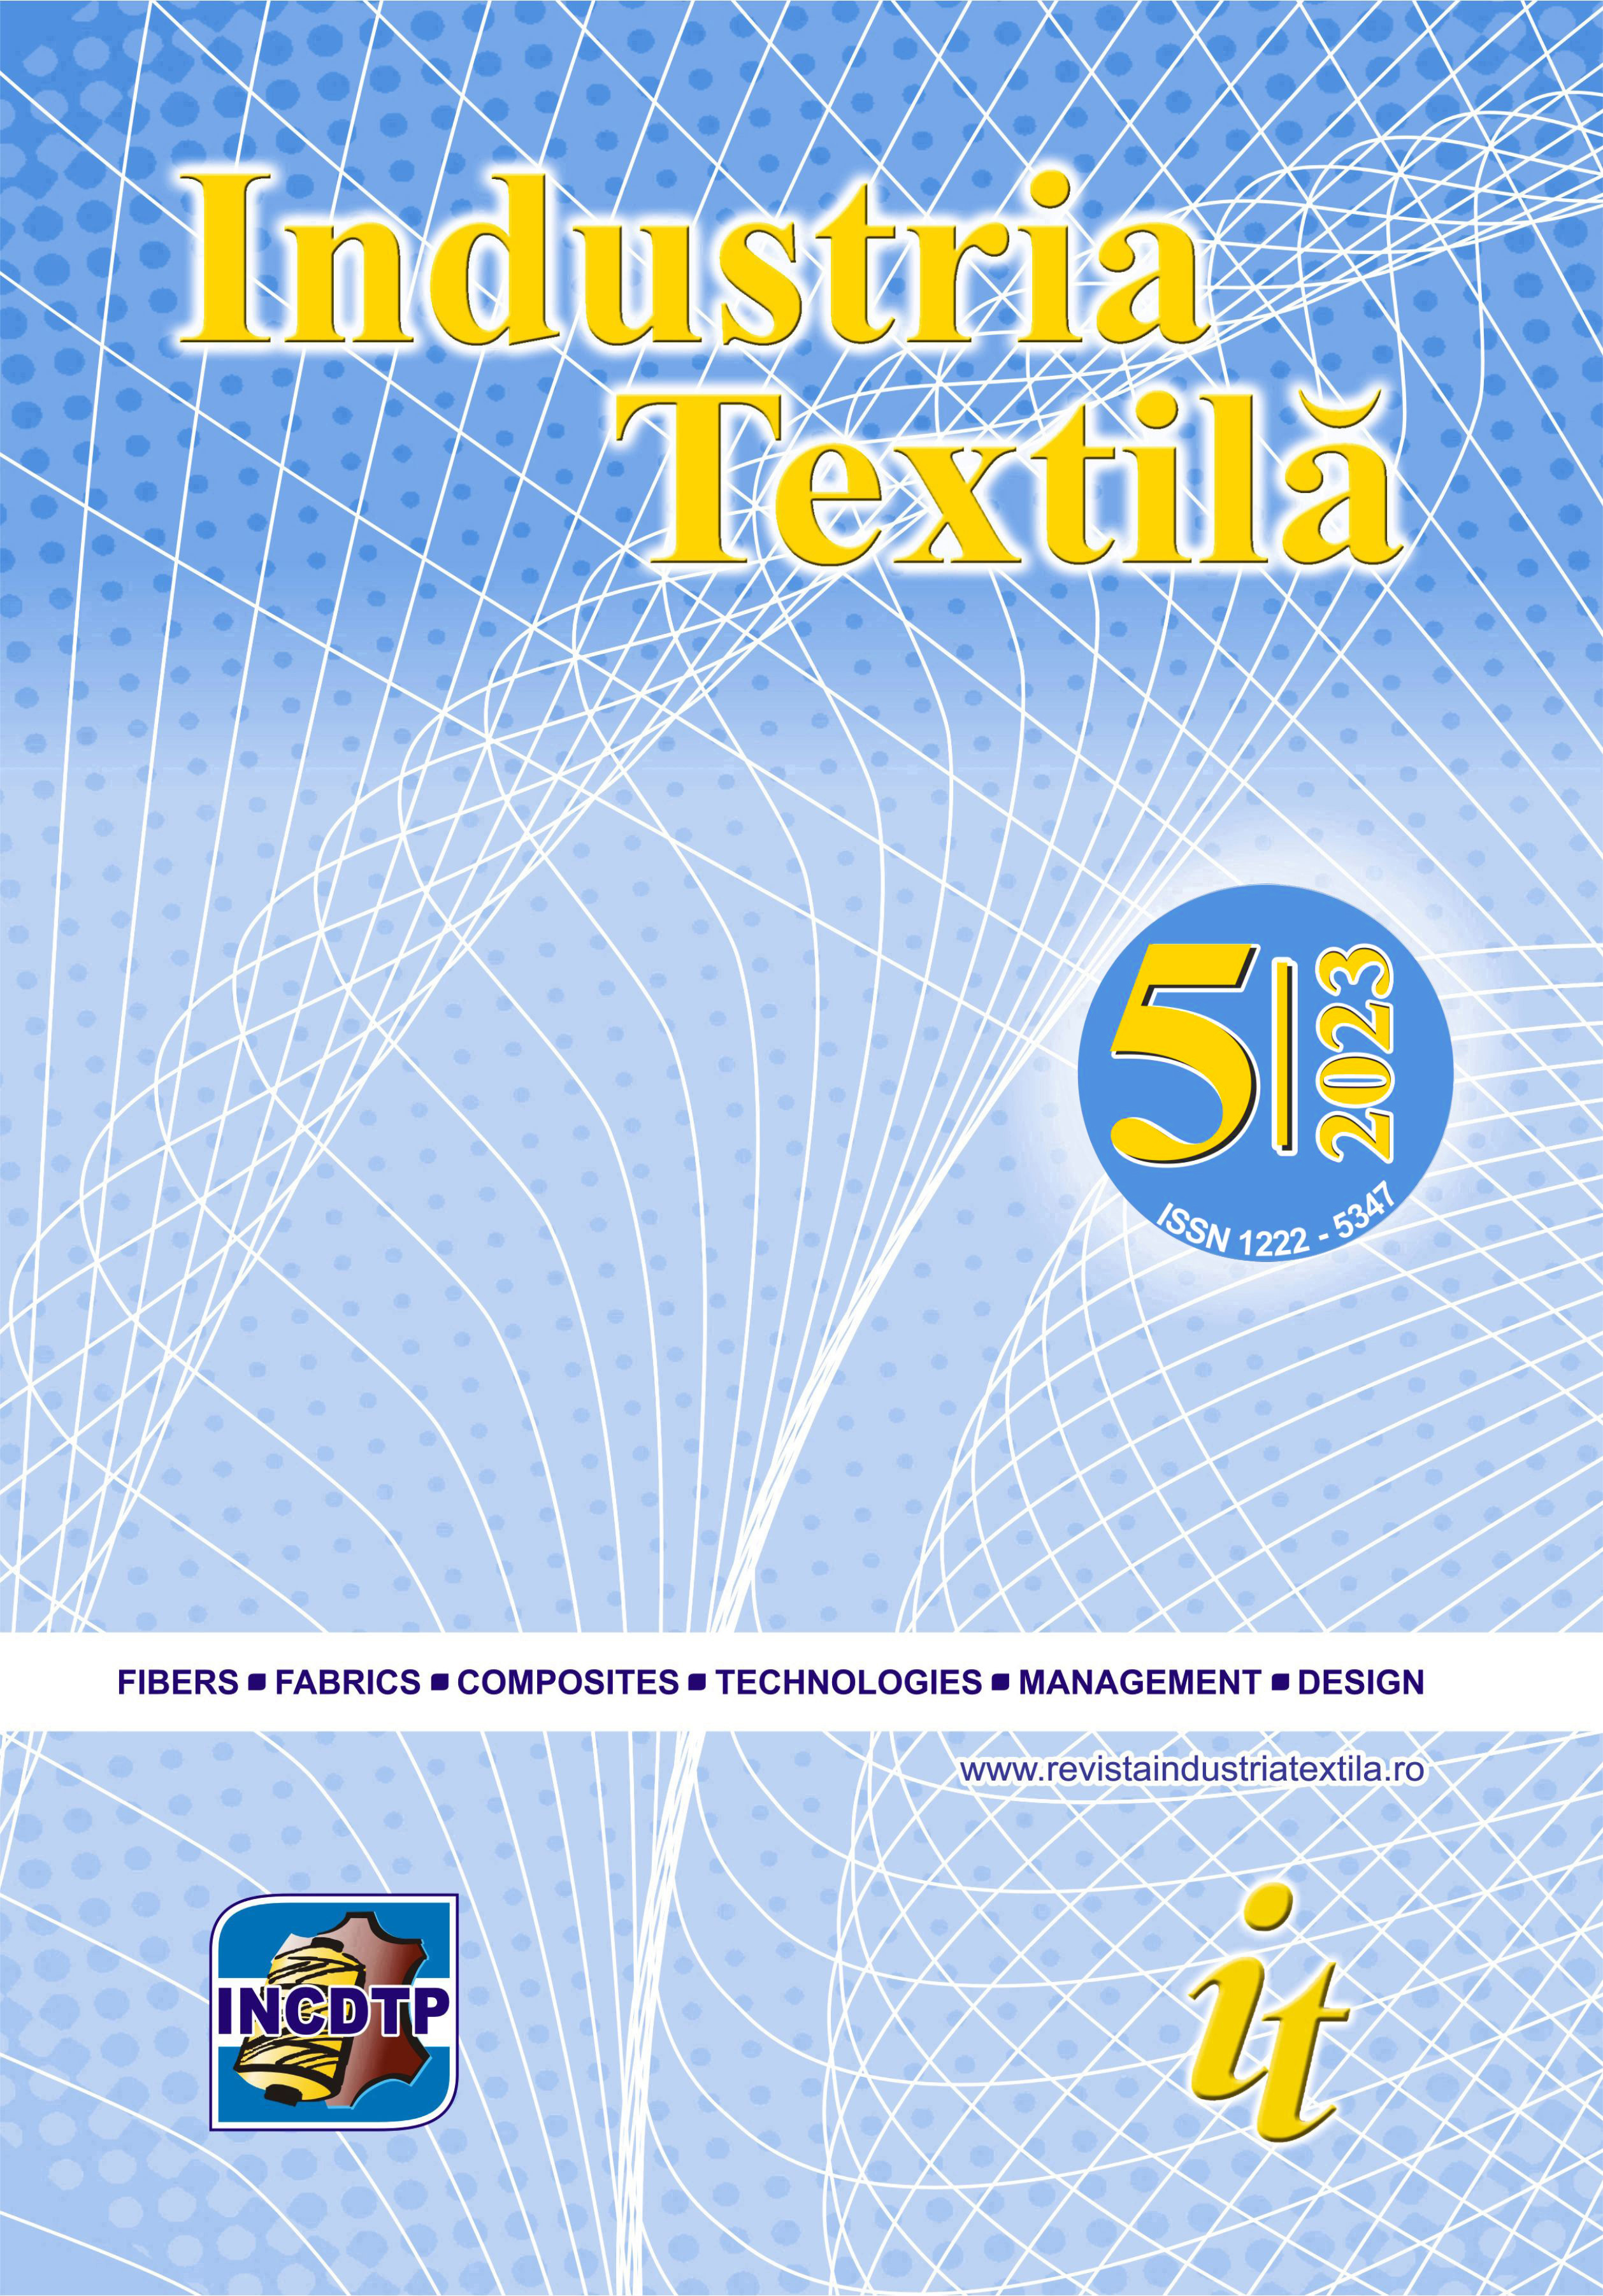 Industria Journal Textila